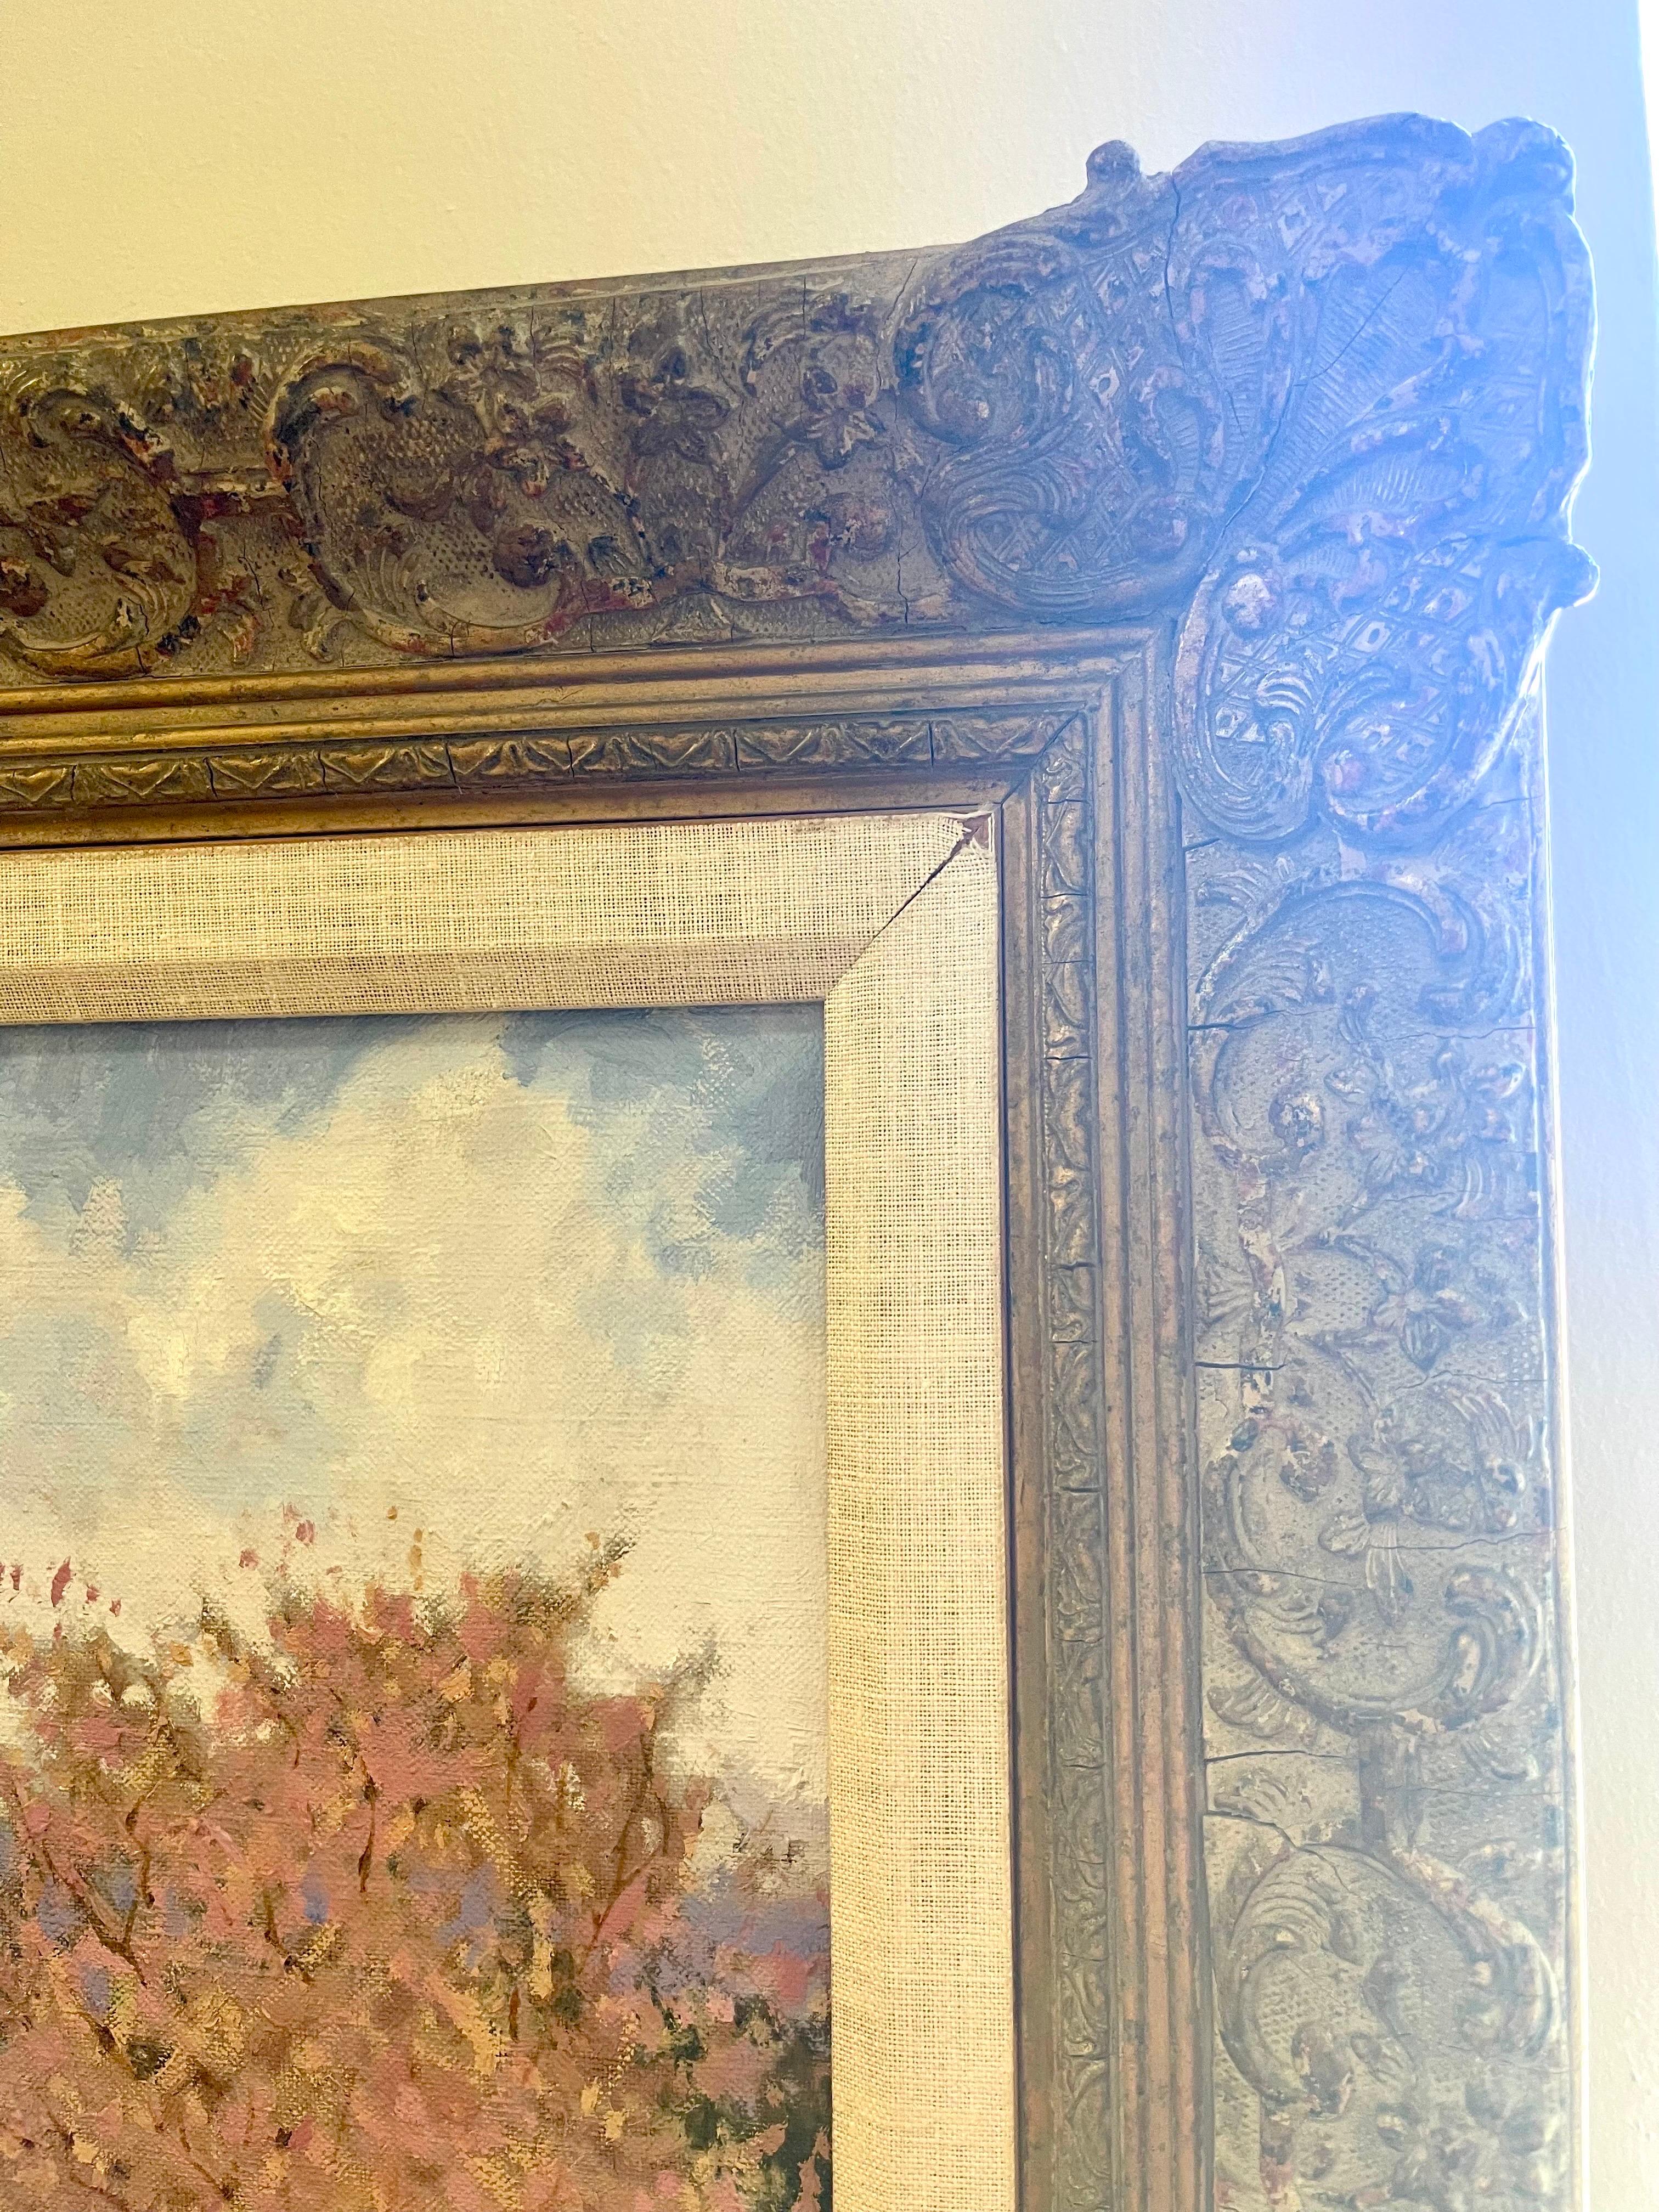 Canvas Original Signed Oil Painting Hudson River Scene By Listed Artist Deborah Cotrone For Sale